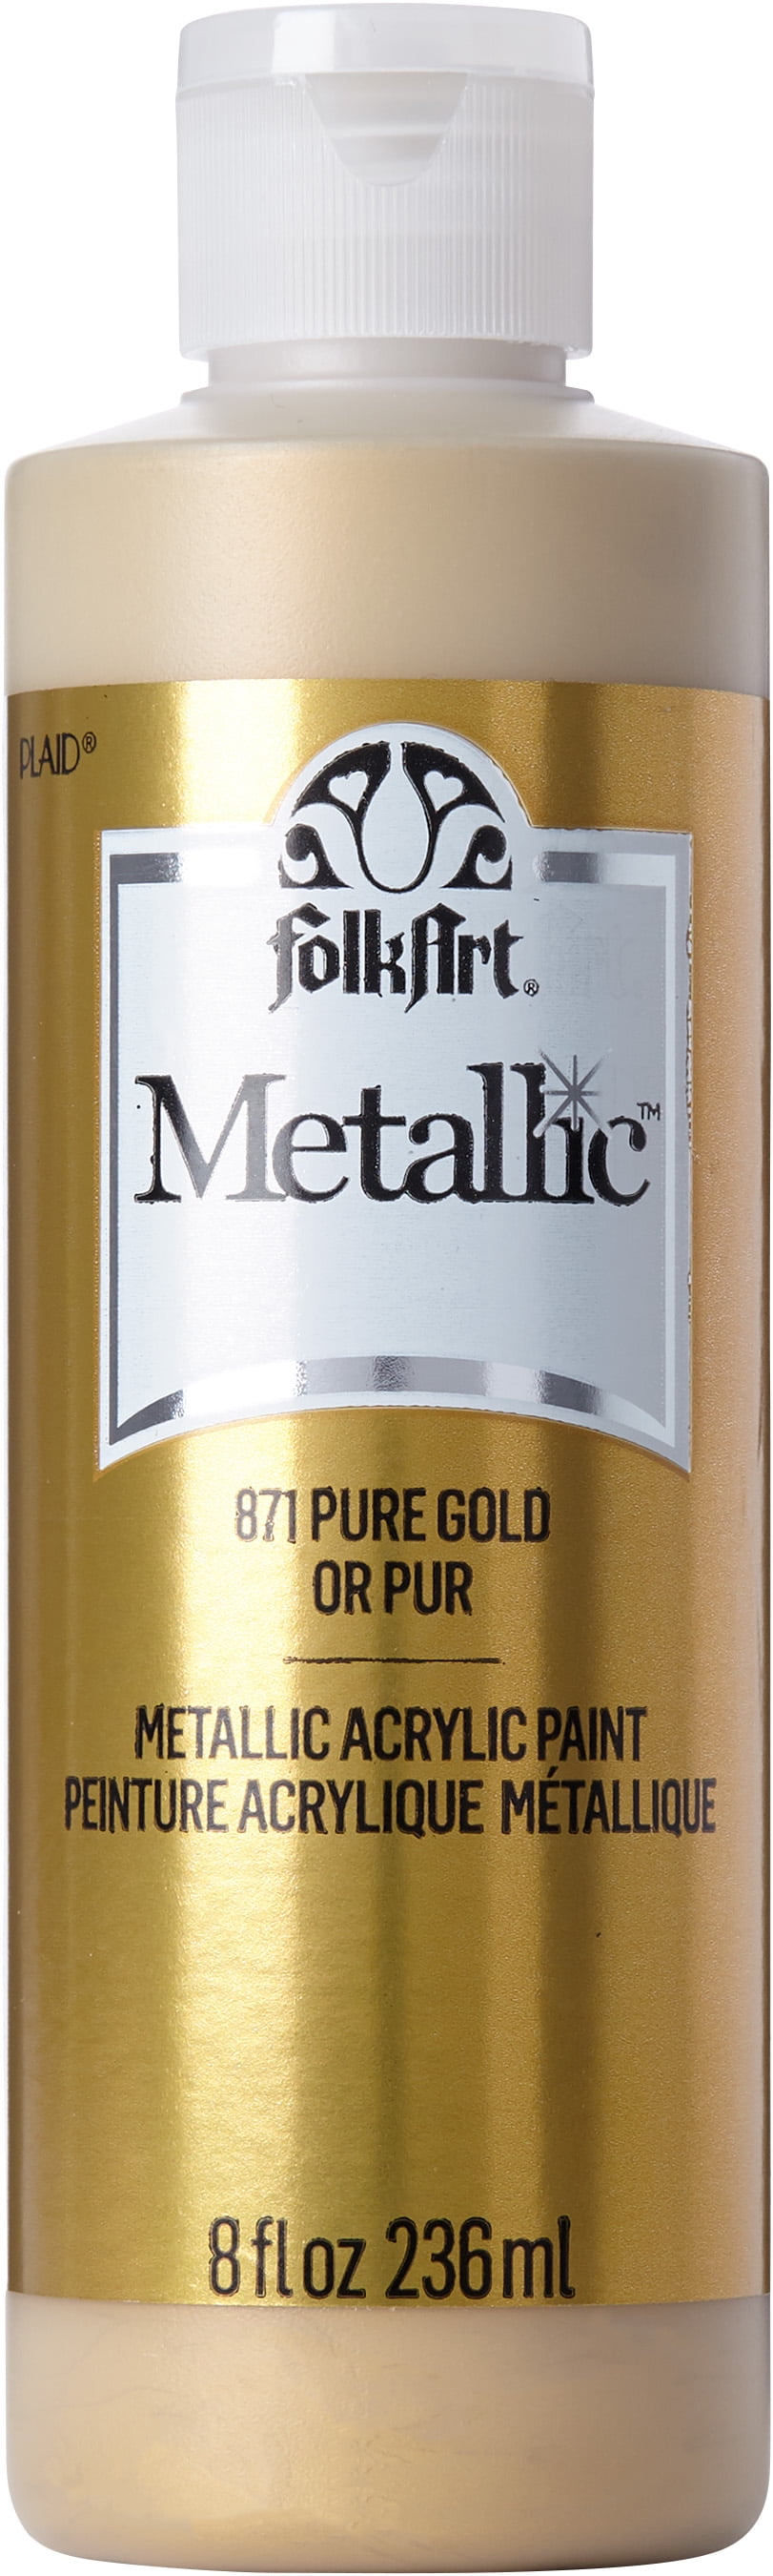 FolkArt Metallic Acrylic Craft Paint, Metallic Finish, Pure Gold, 8 fl oz